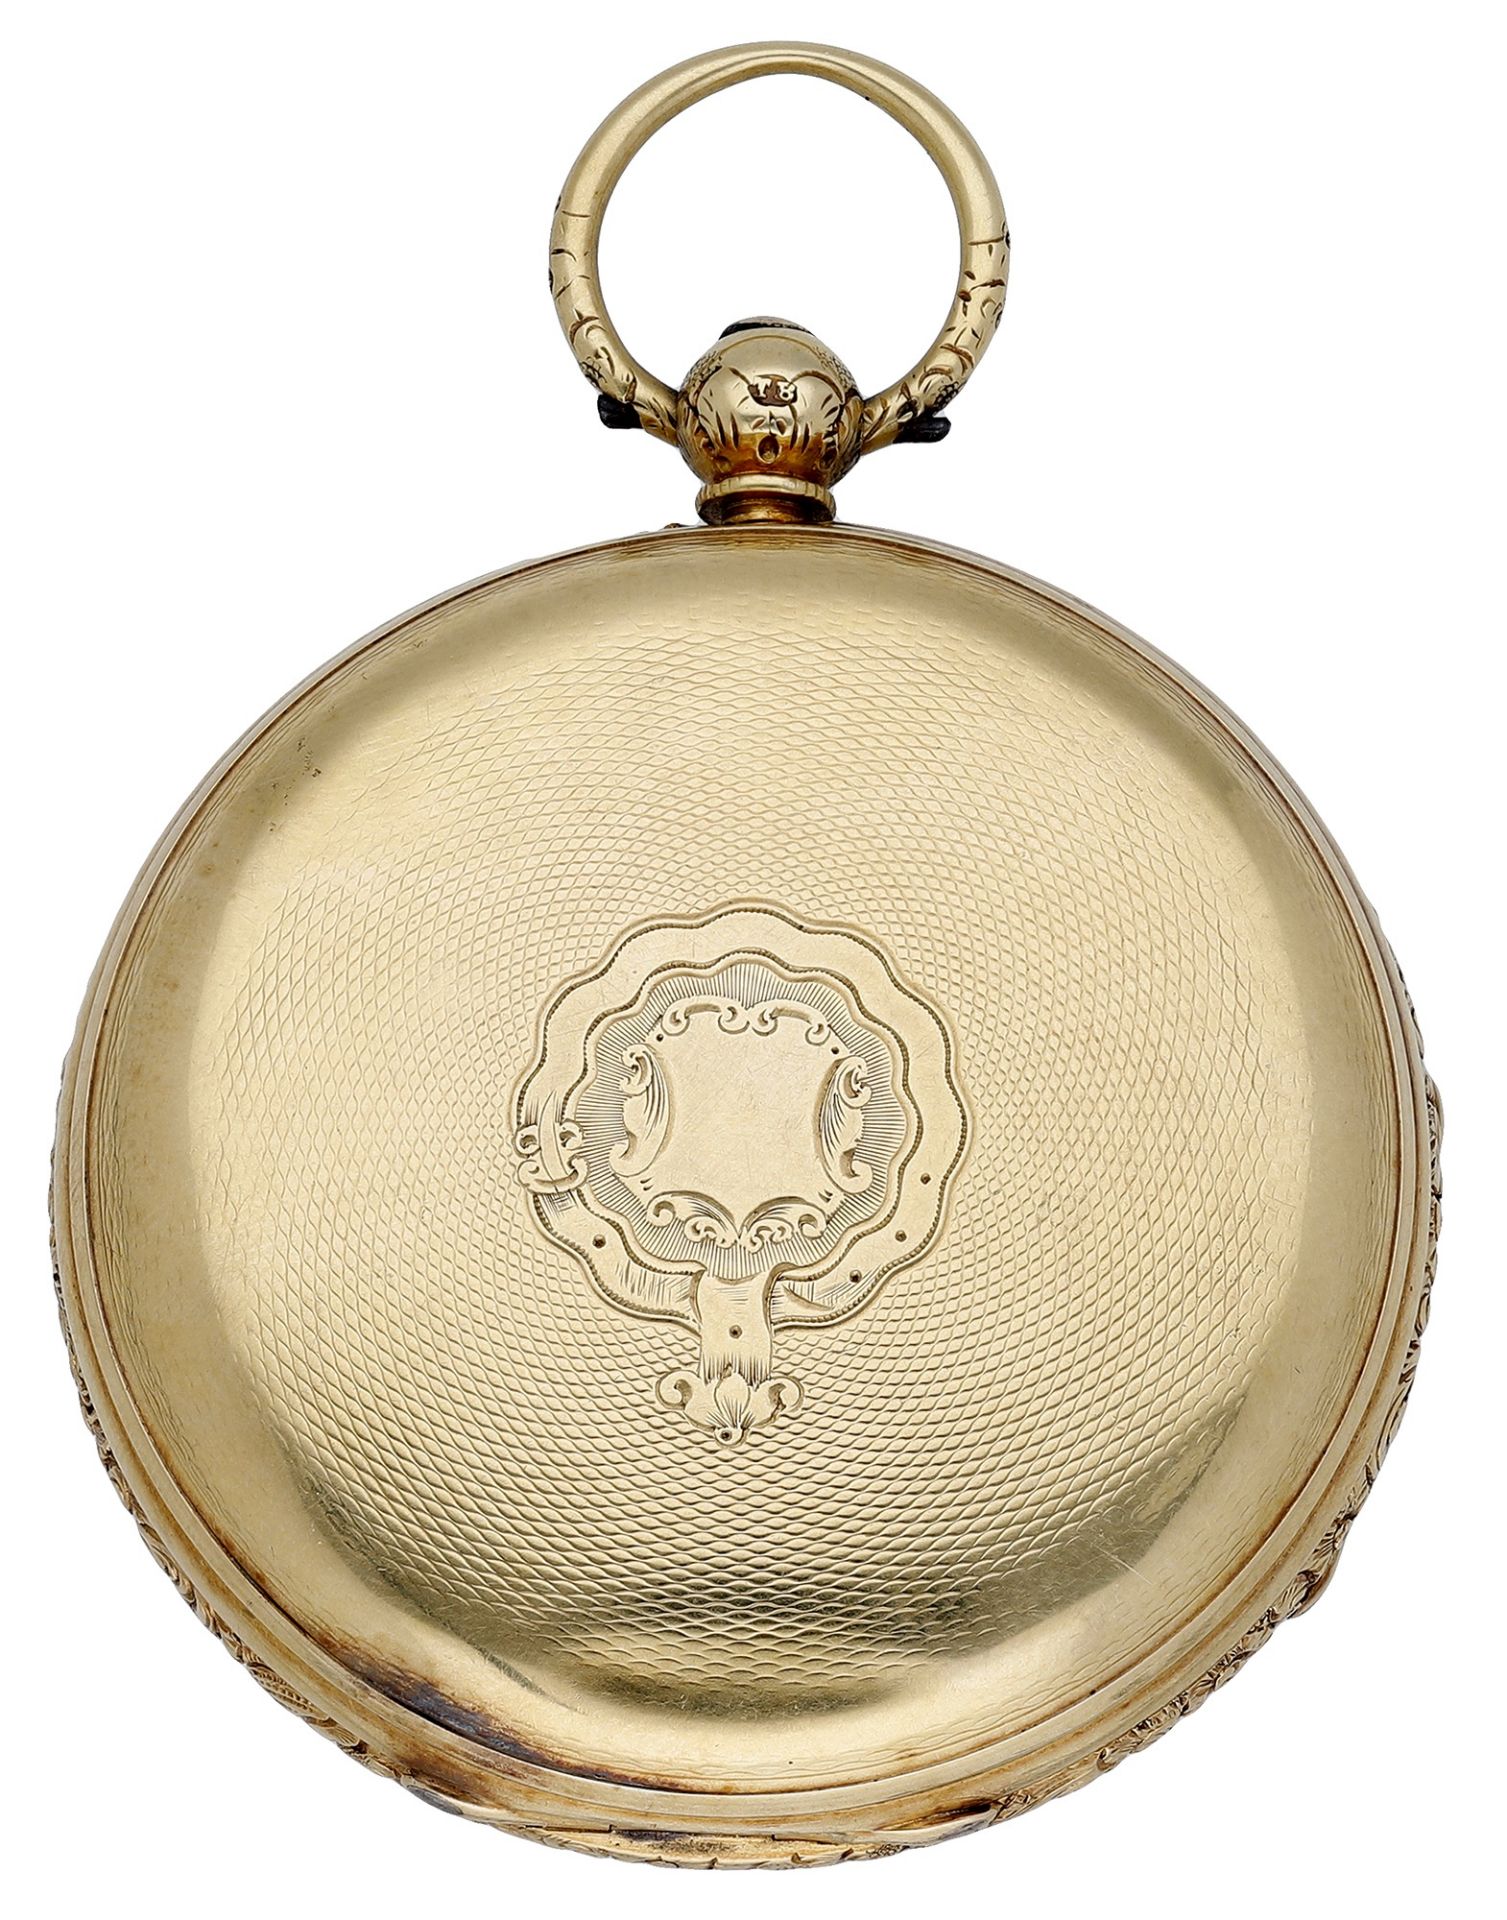 Brillman, London. A gold consular cased watch, circa 1870. Movement: gilt full plate, lever... - Bild 2 aus 5